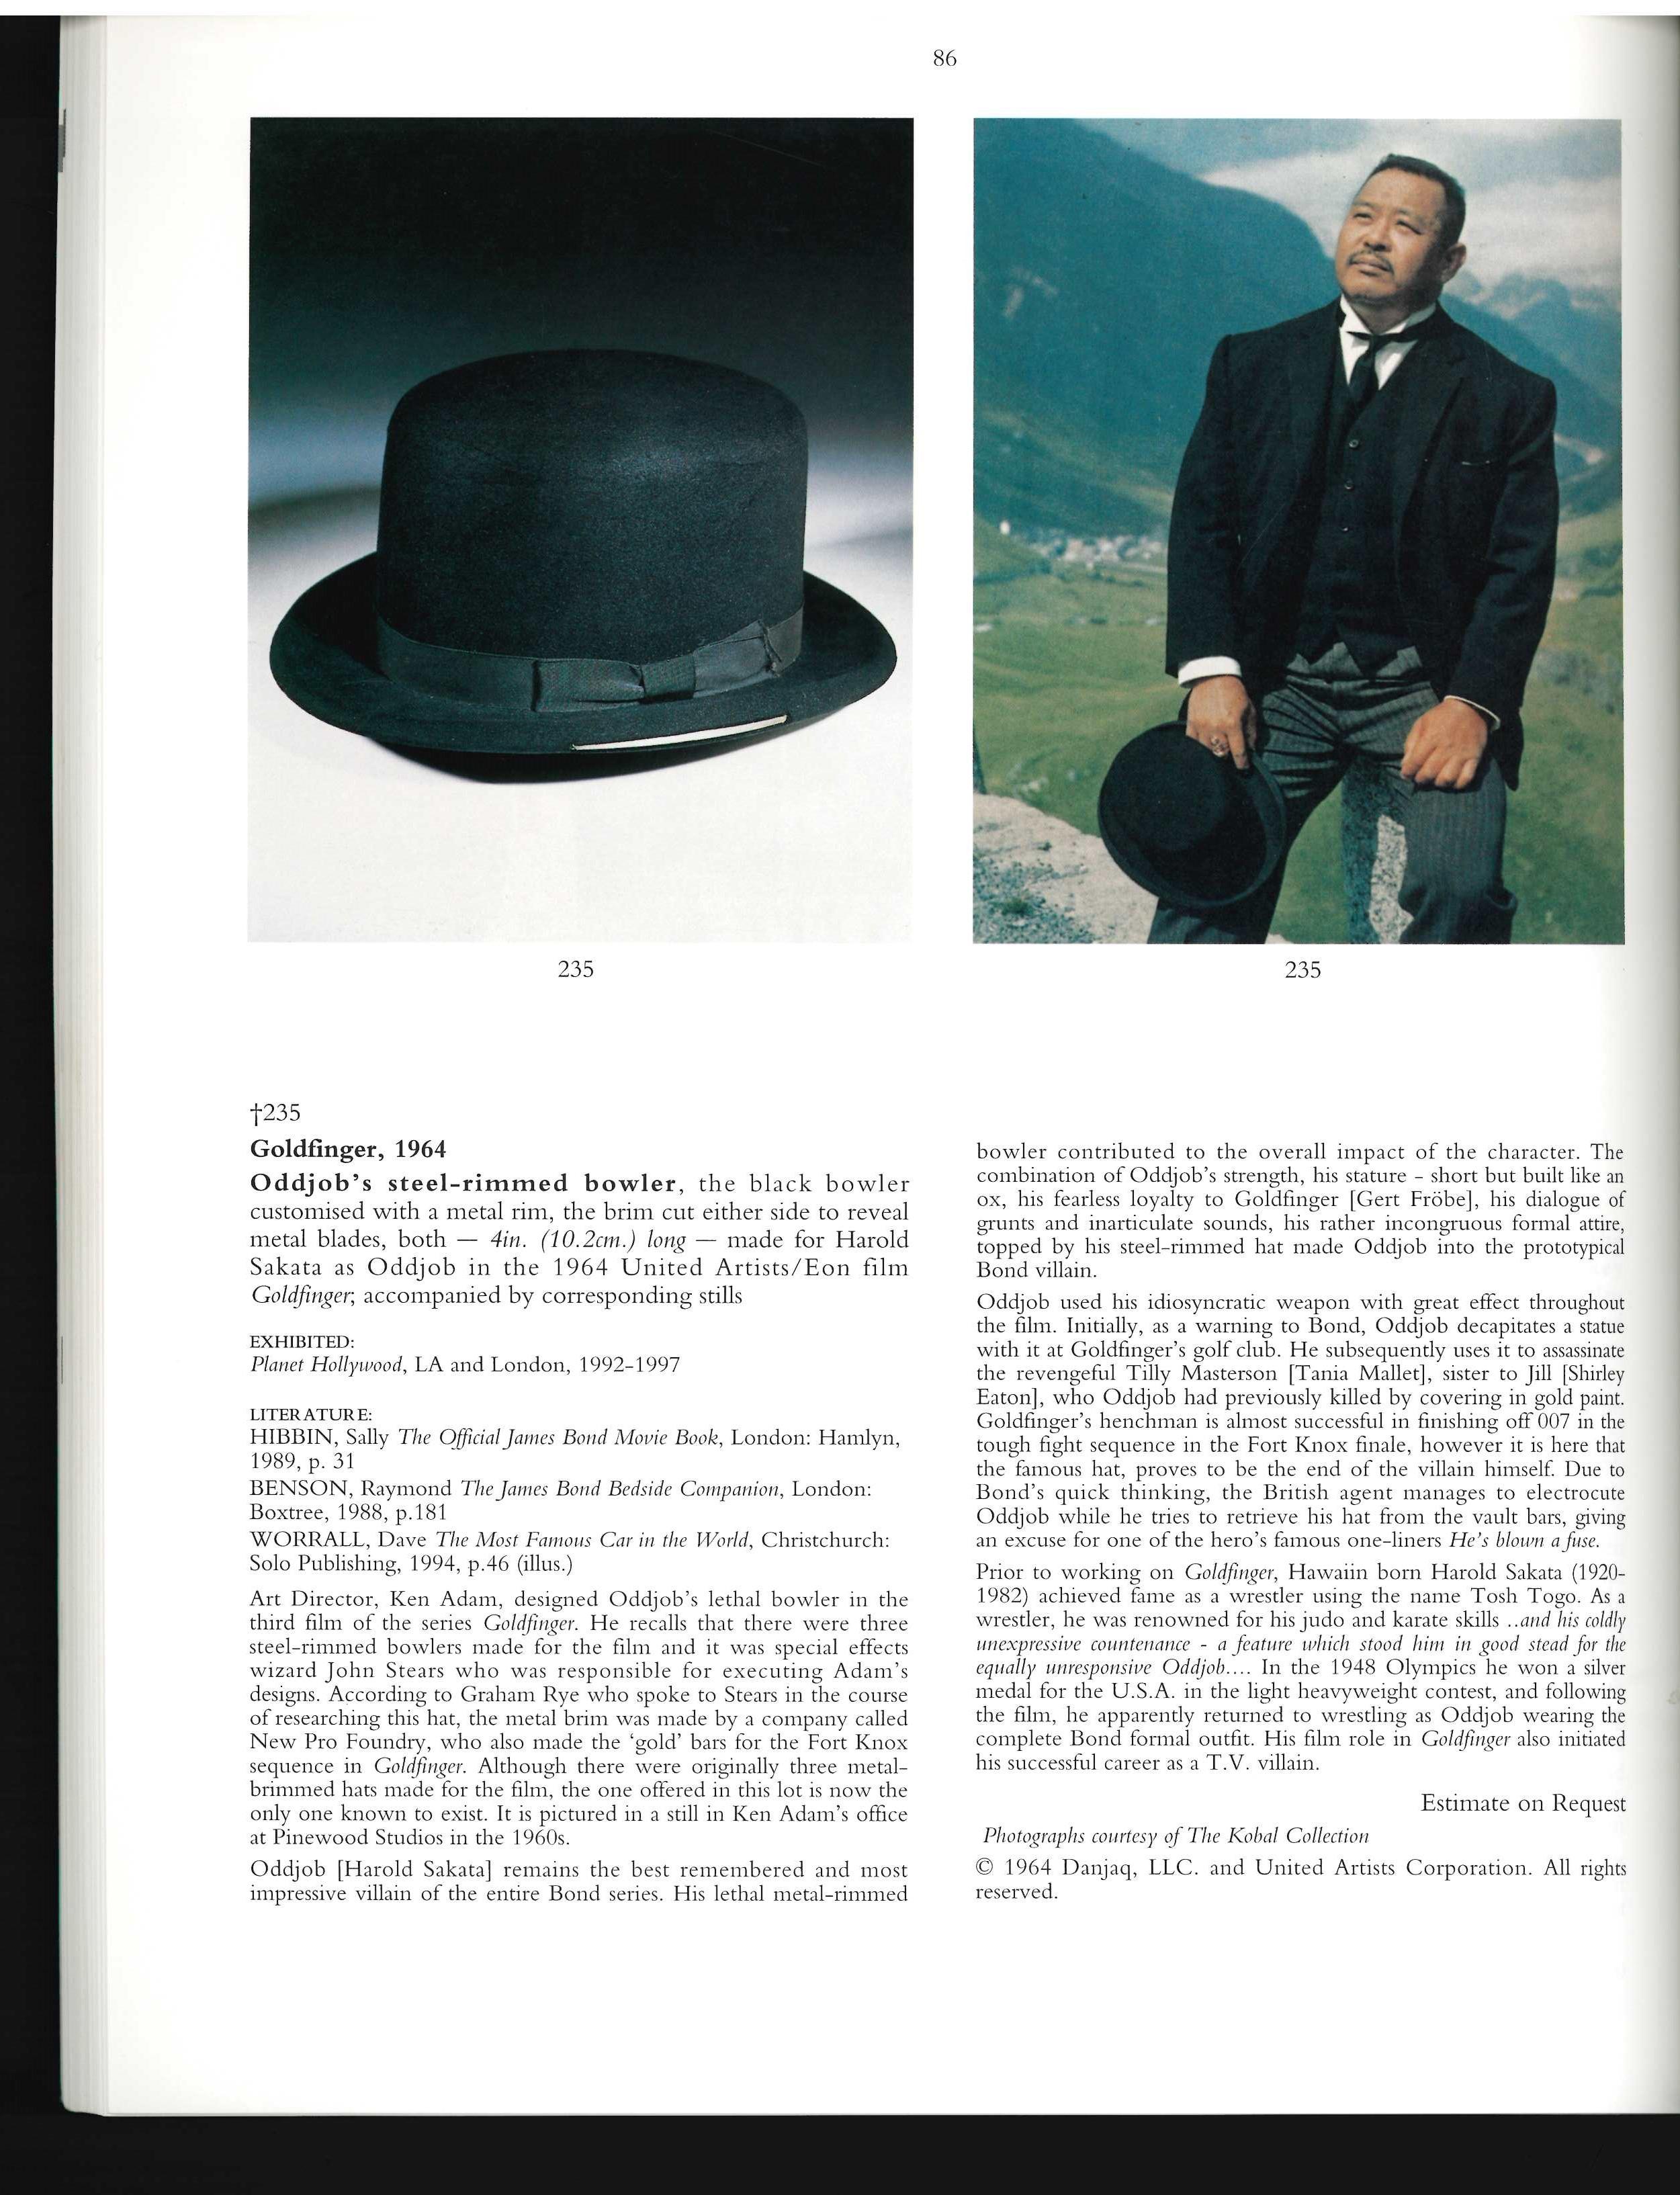 James Bond 007, Catalogue de vente Christies de septembre 1998 (livre) en vente 2